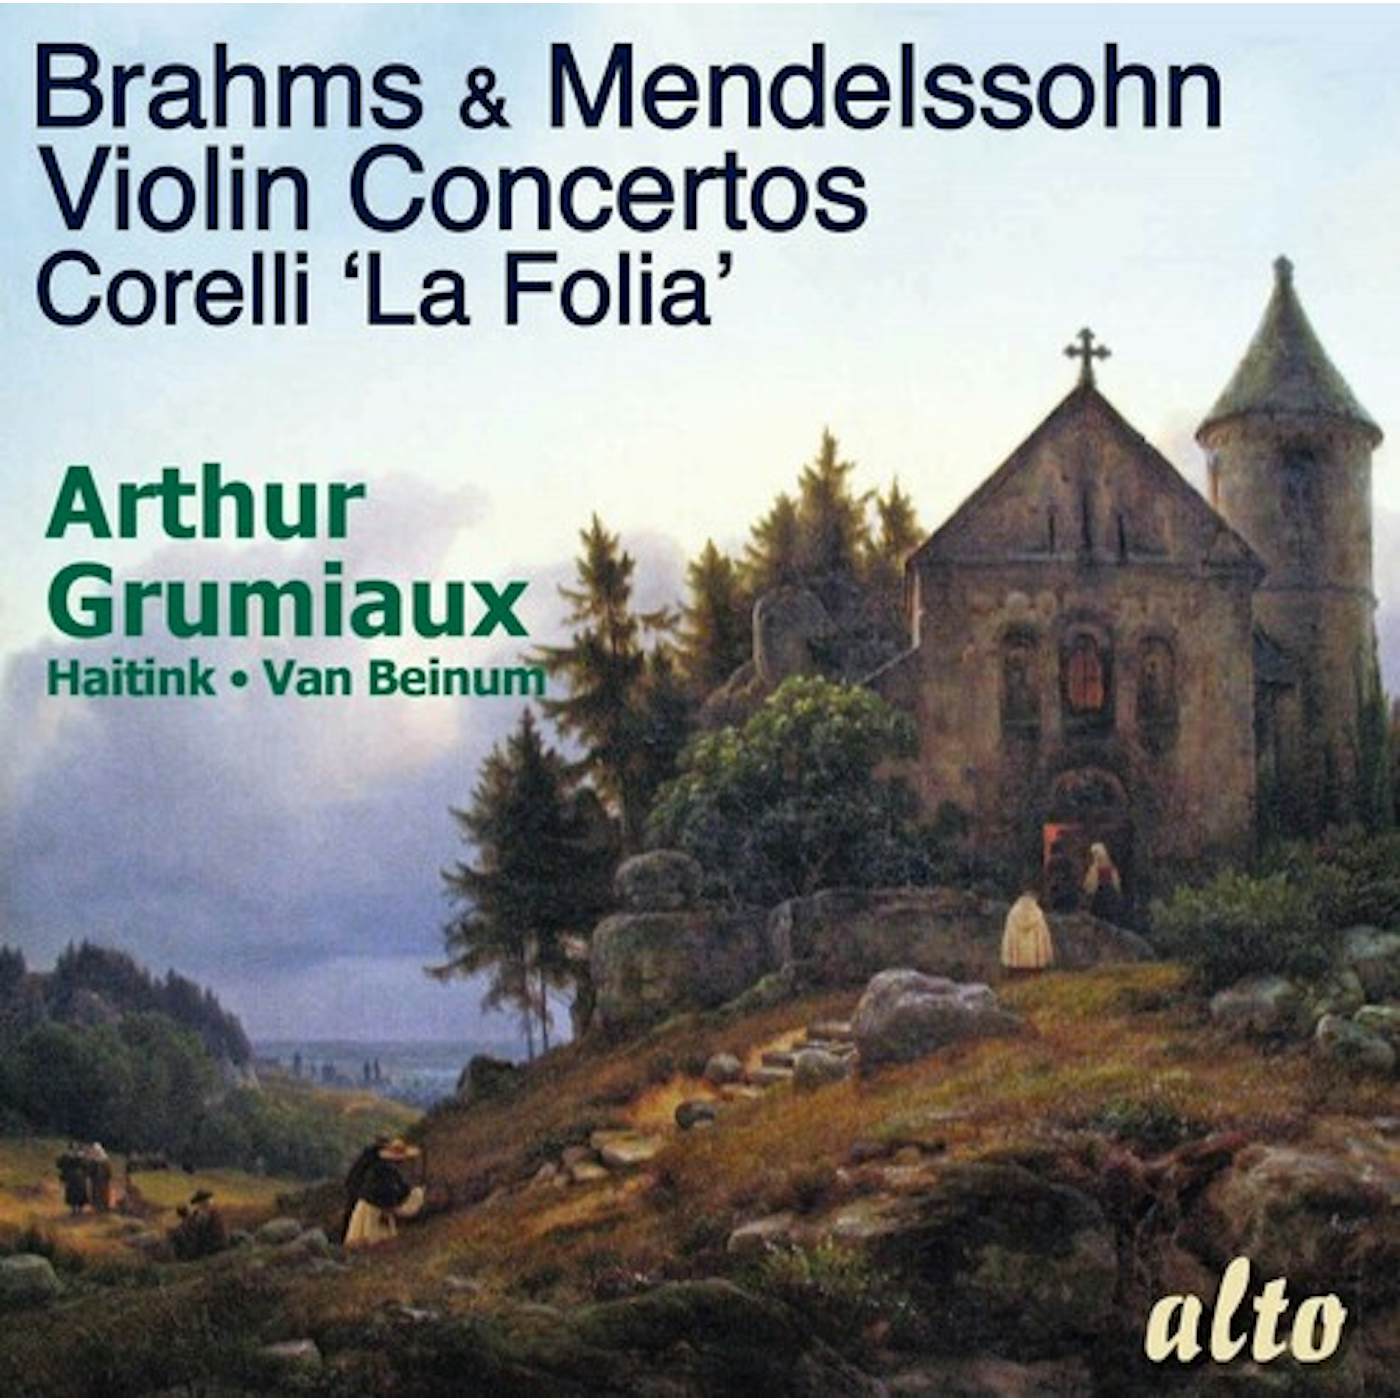 Arthur Grumiaux BRAHMS & MENDELLSOHN VIOLIN CONCERTOS CORELLI CD